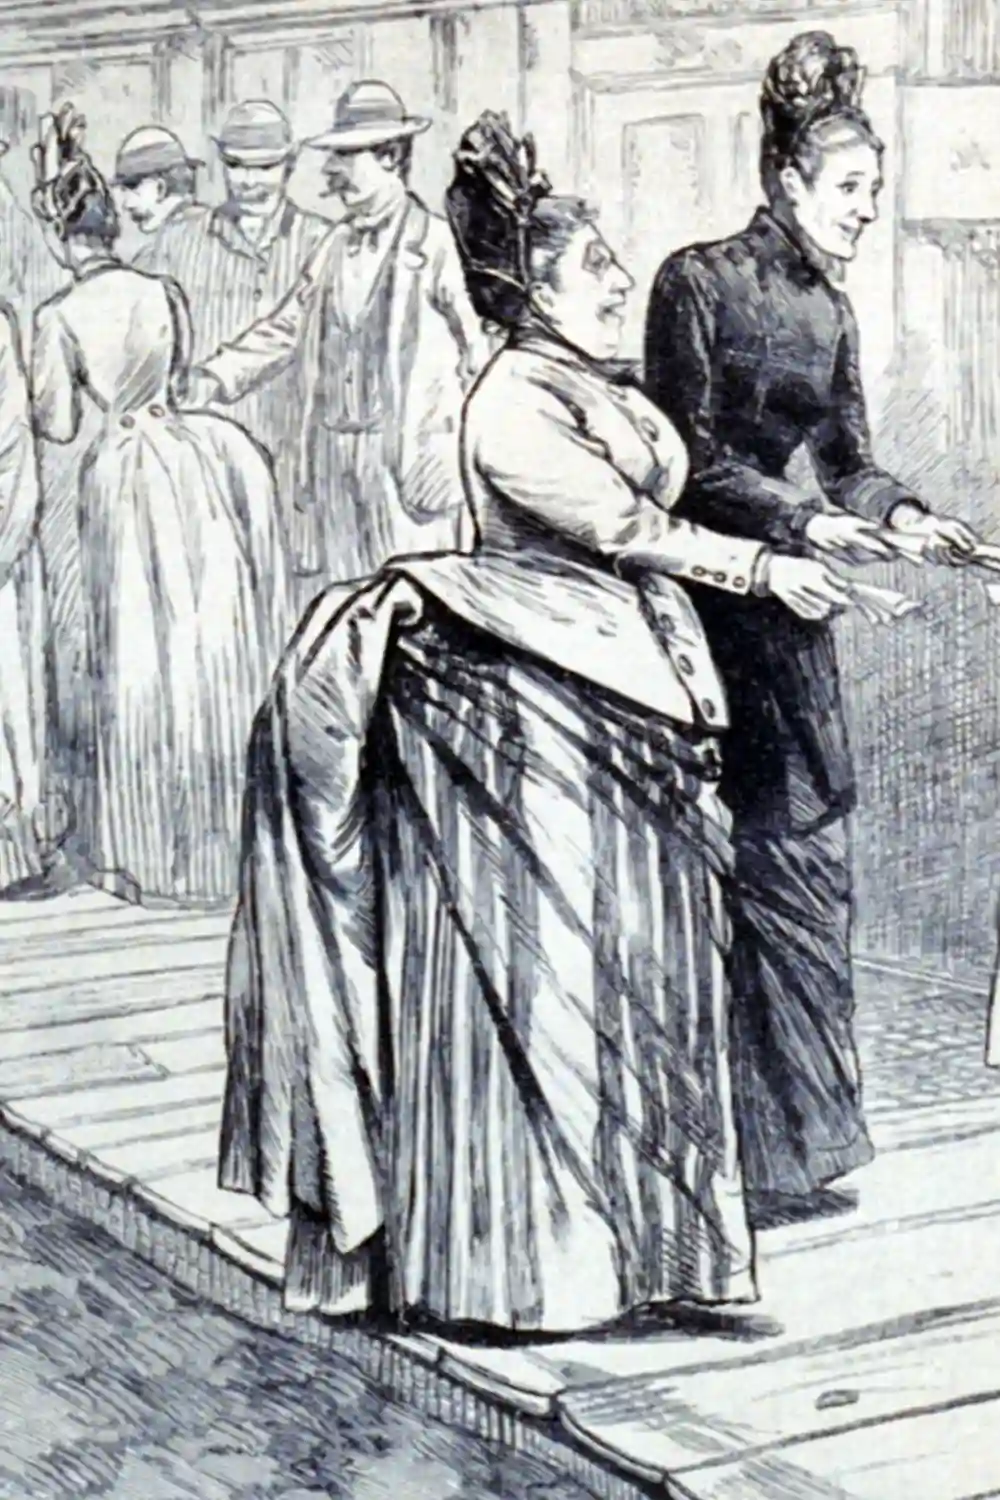 Women wearing bustles